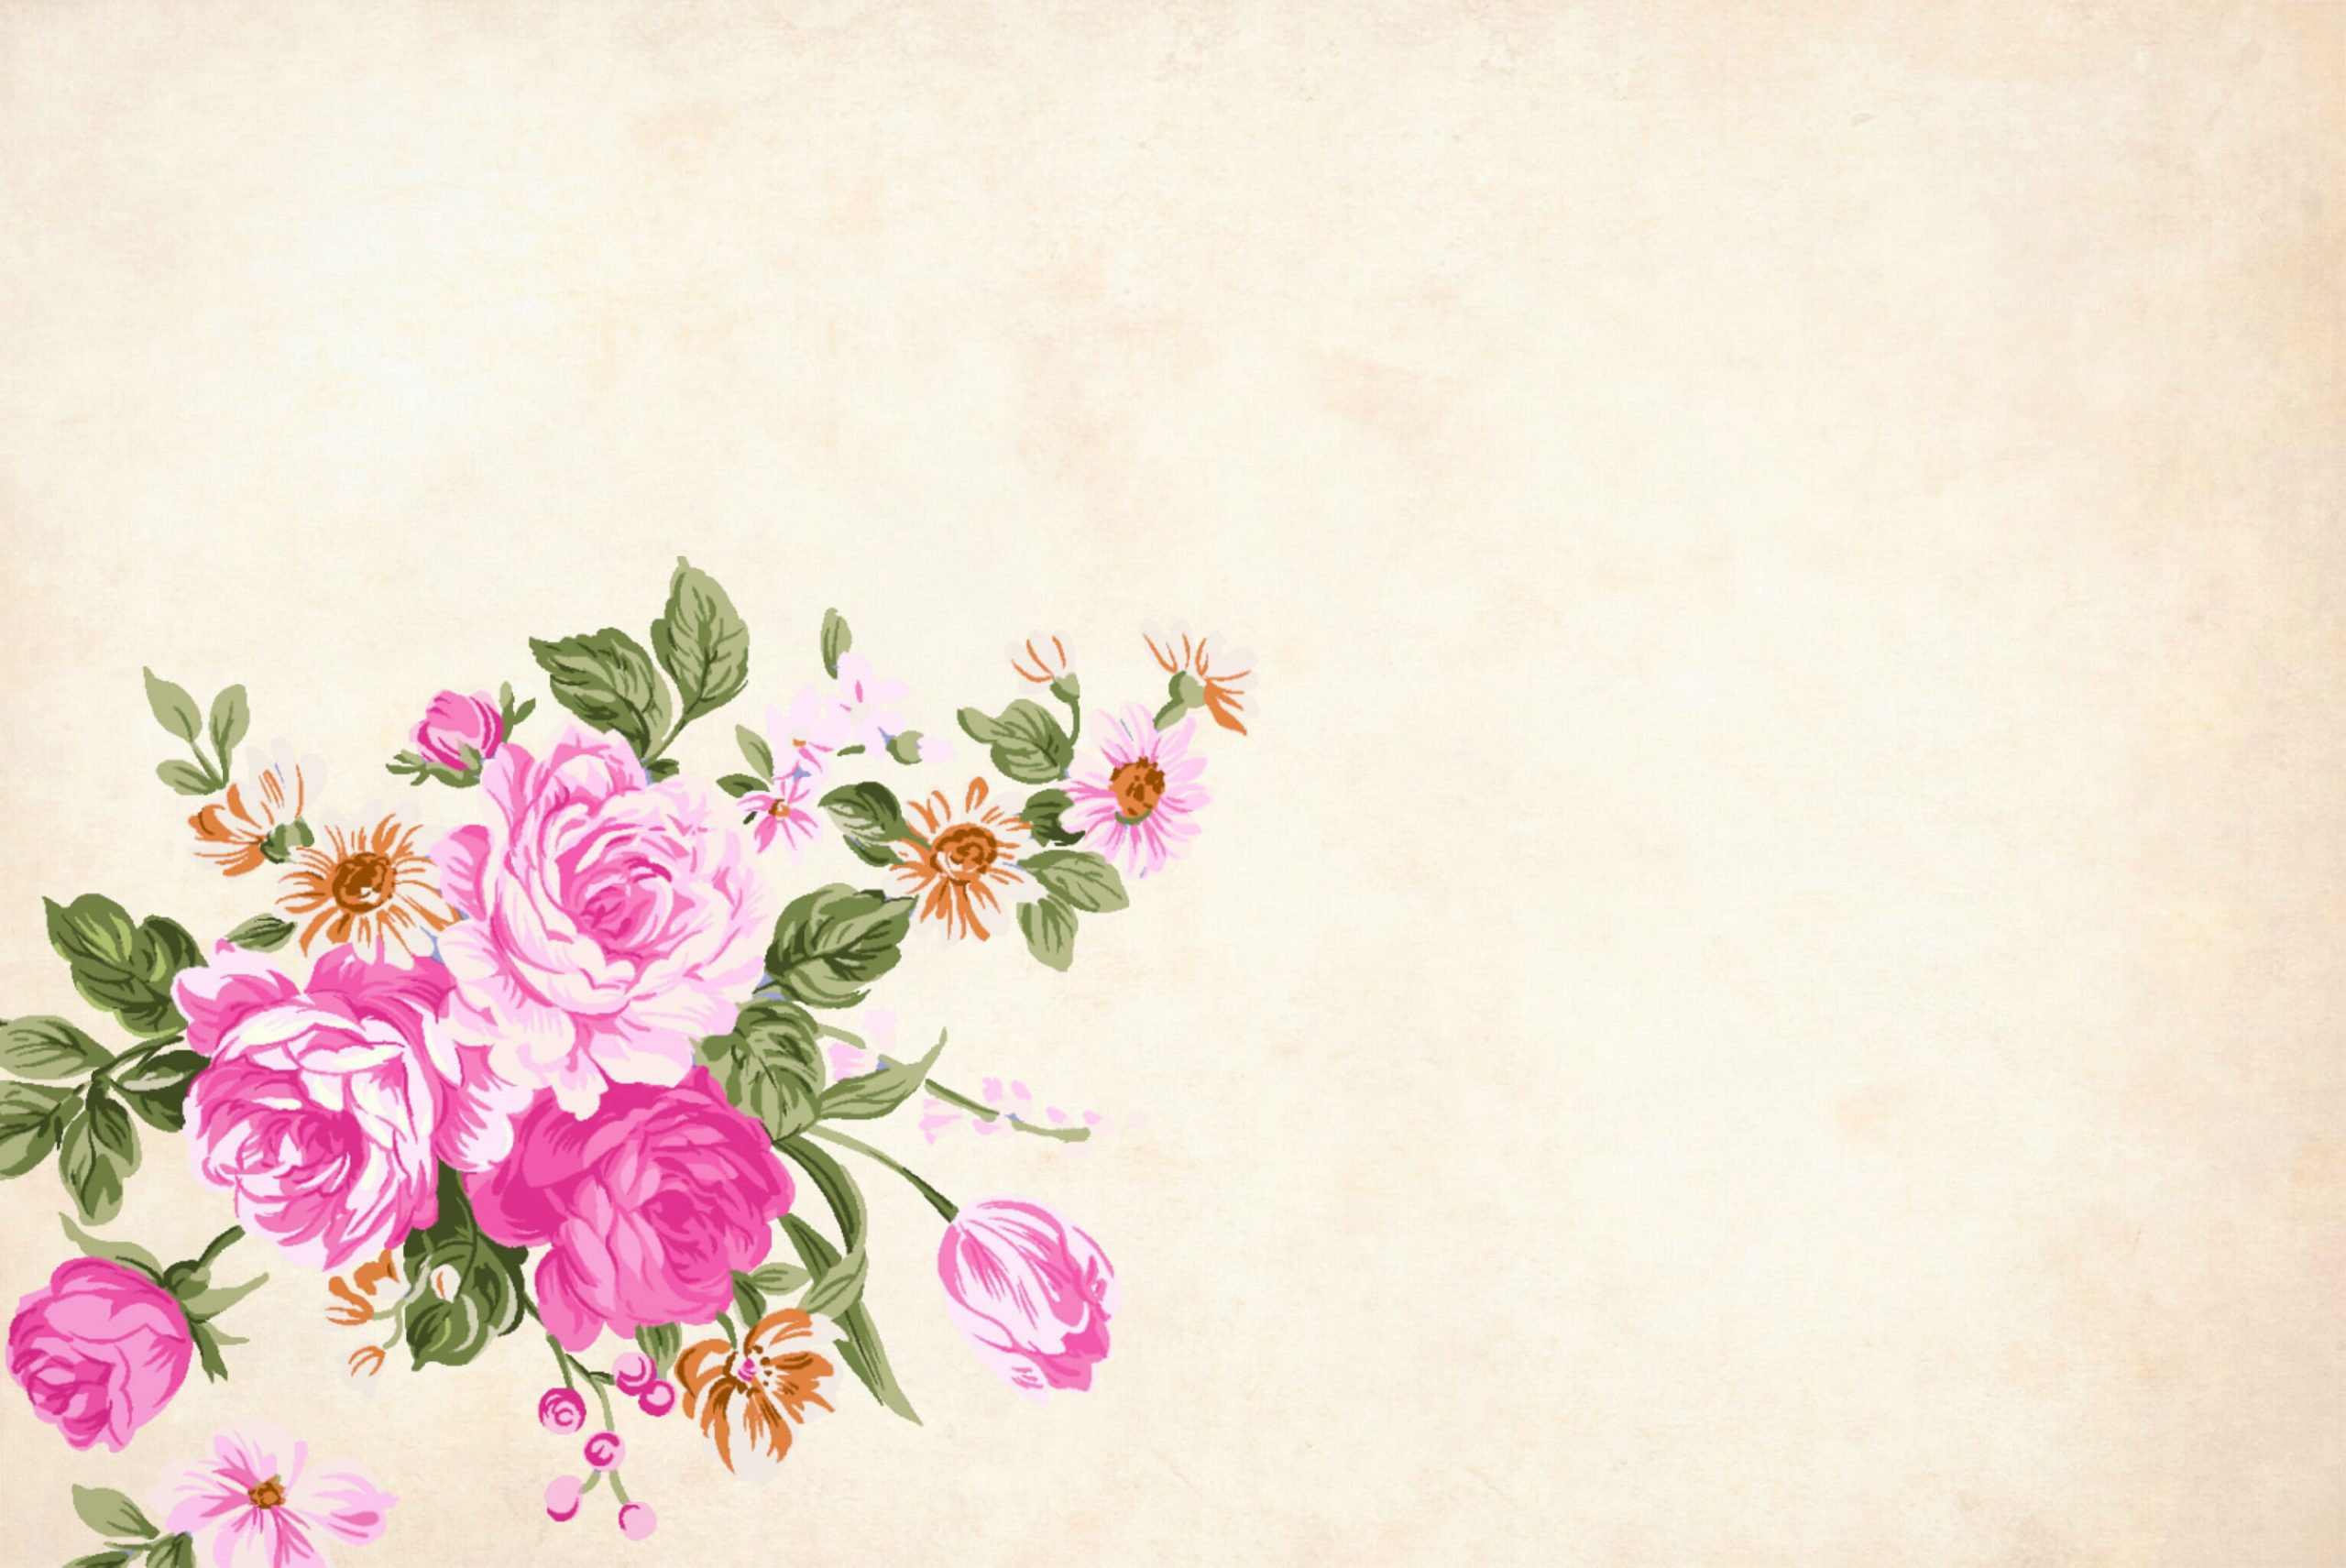 Flower wallpaper with copyspace, floral, border, garden frame